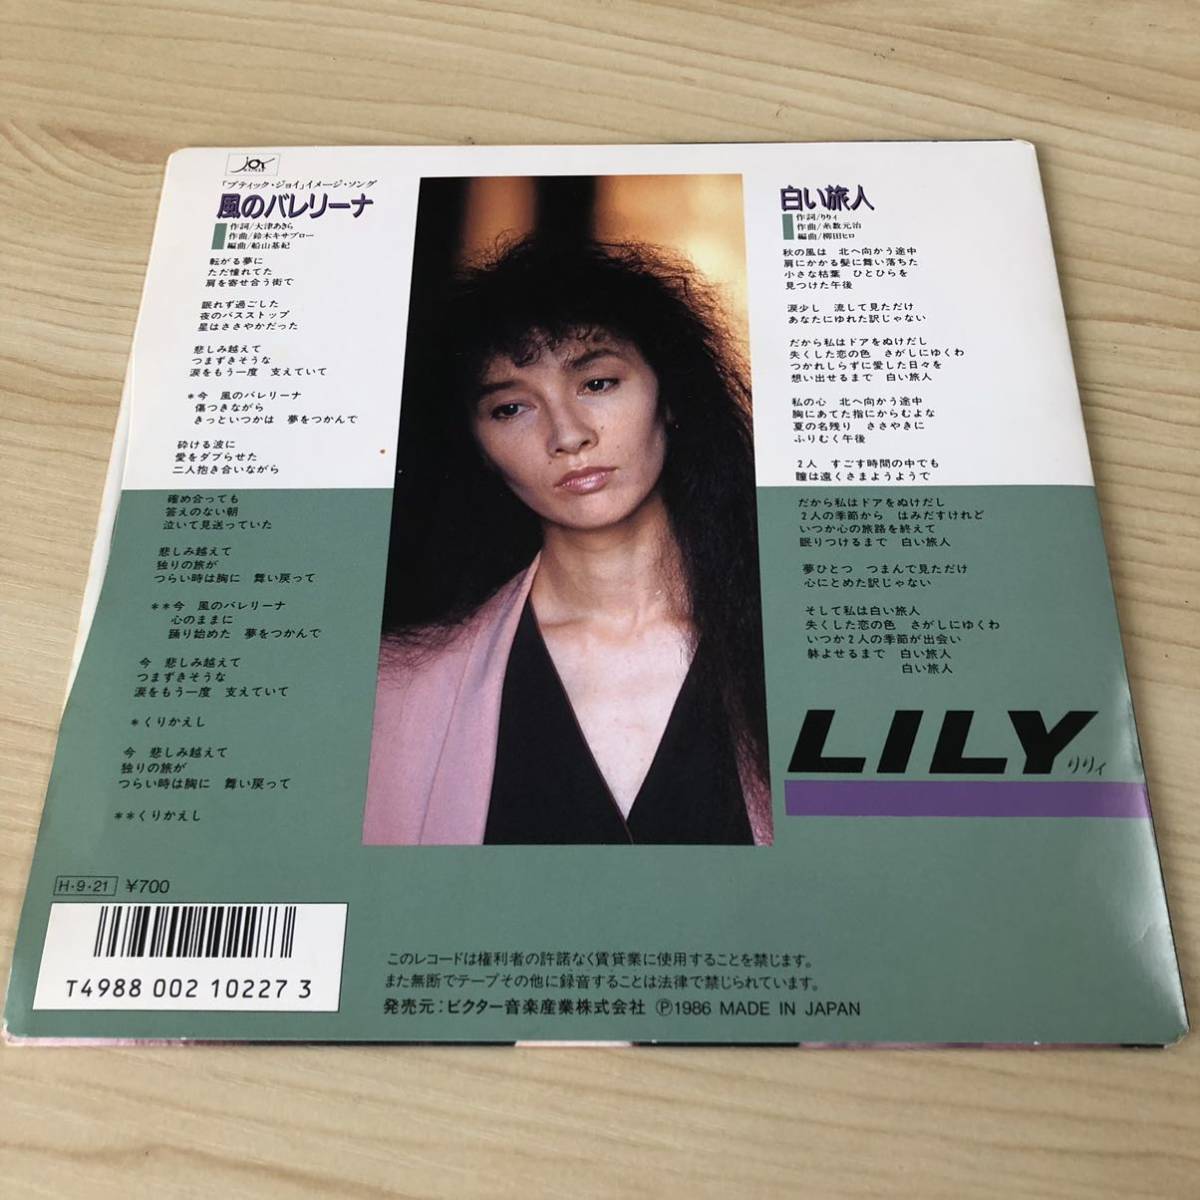 【7inch】LILY りりィ 風のバレリーナ 白い旅人 / EP レコード / VIHX1699 / 和モノ 昭和歌謡 /_画像2